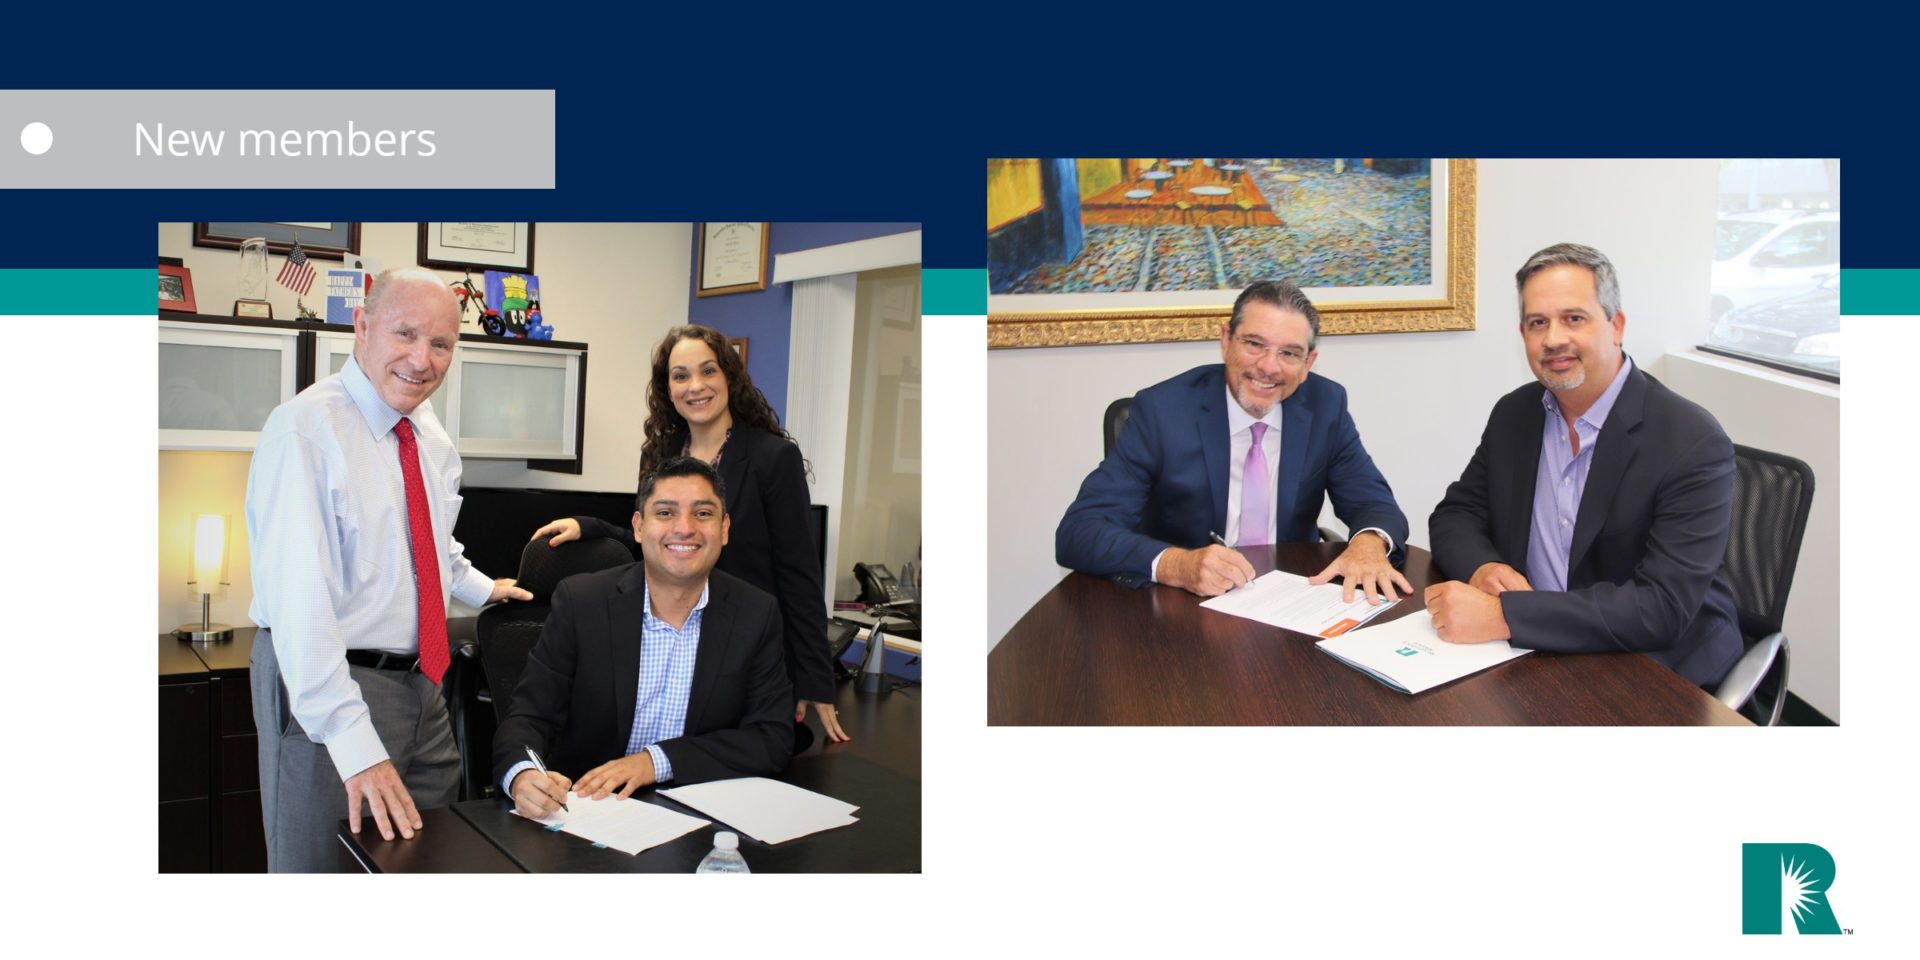 New Reniassance Alliance Florida members signing agreement